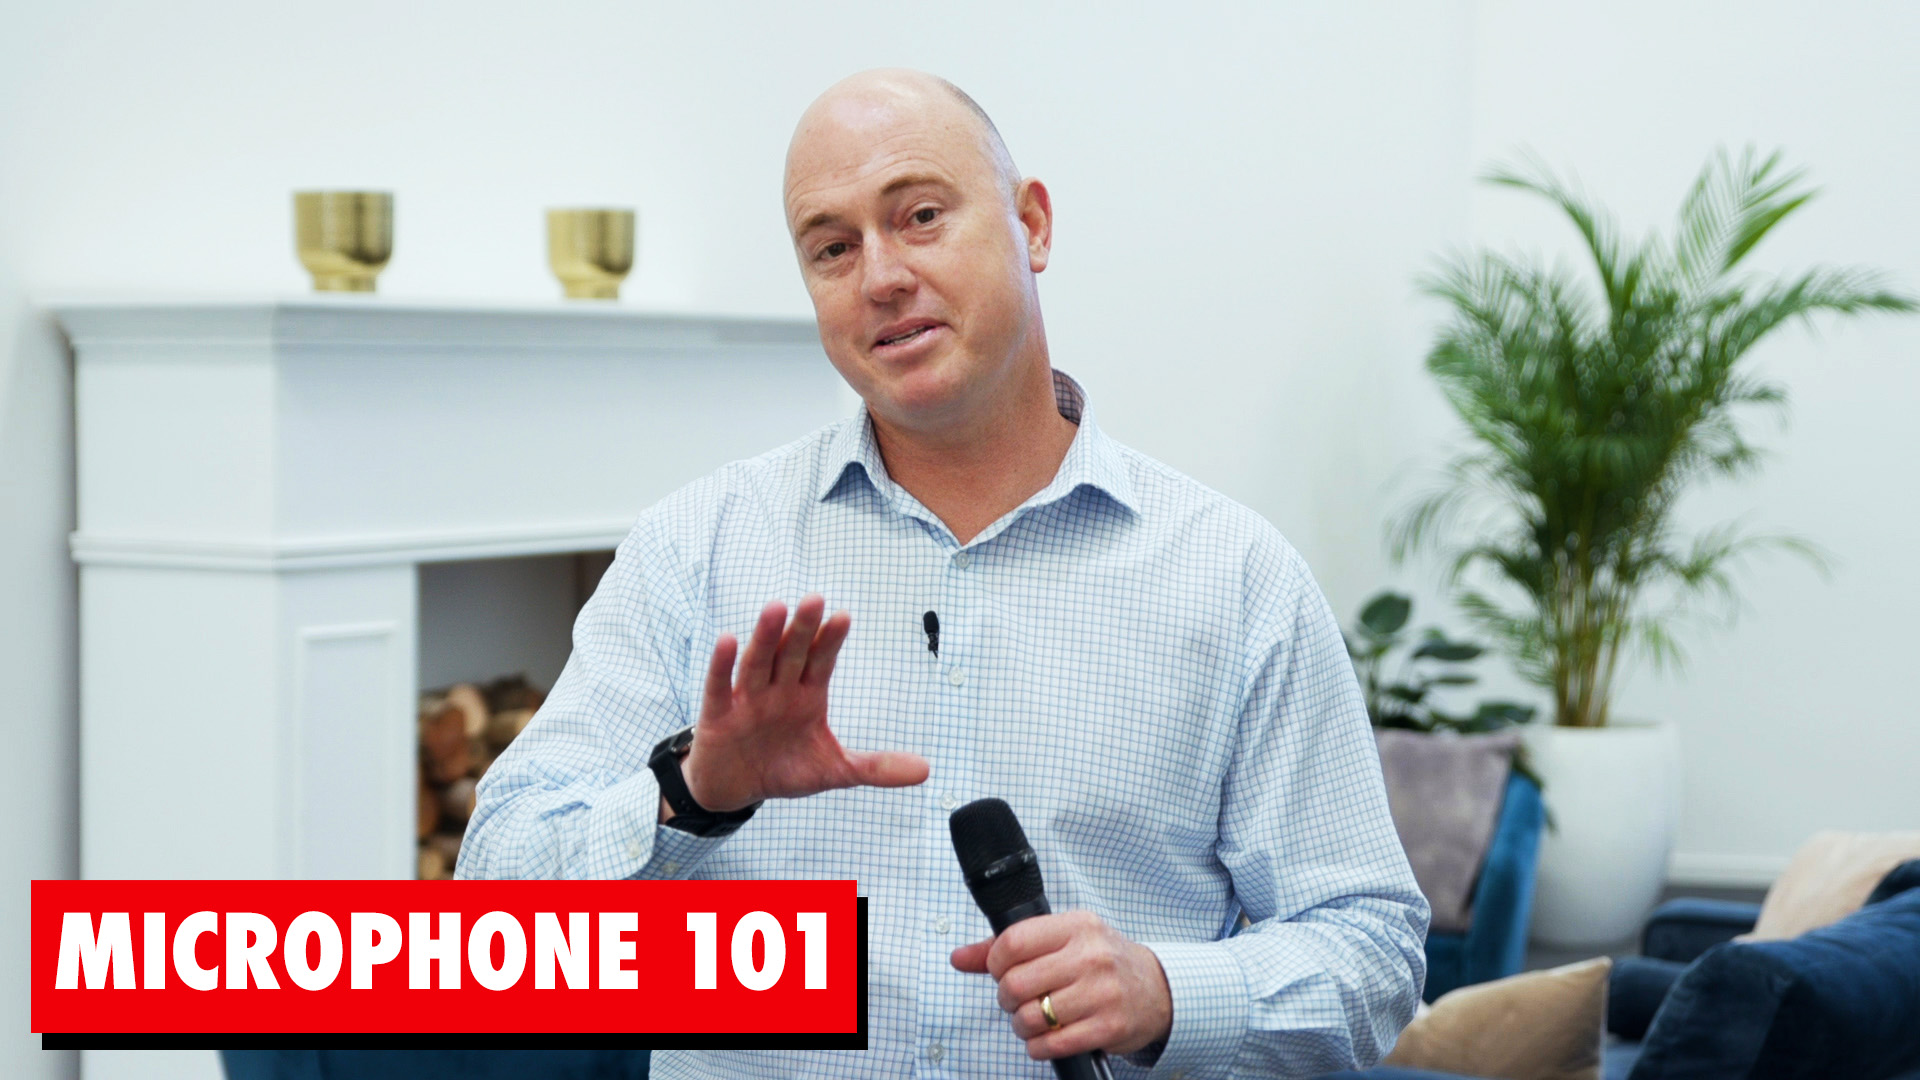 Trevor Ambrose Public Speaking Sales Presenting Microphone Tips 101 1920x1080